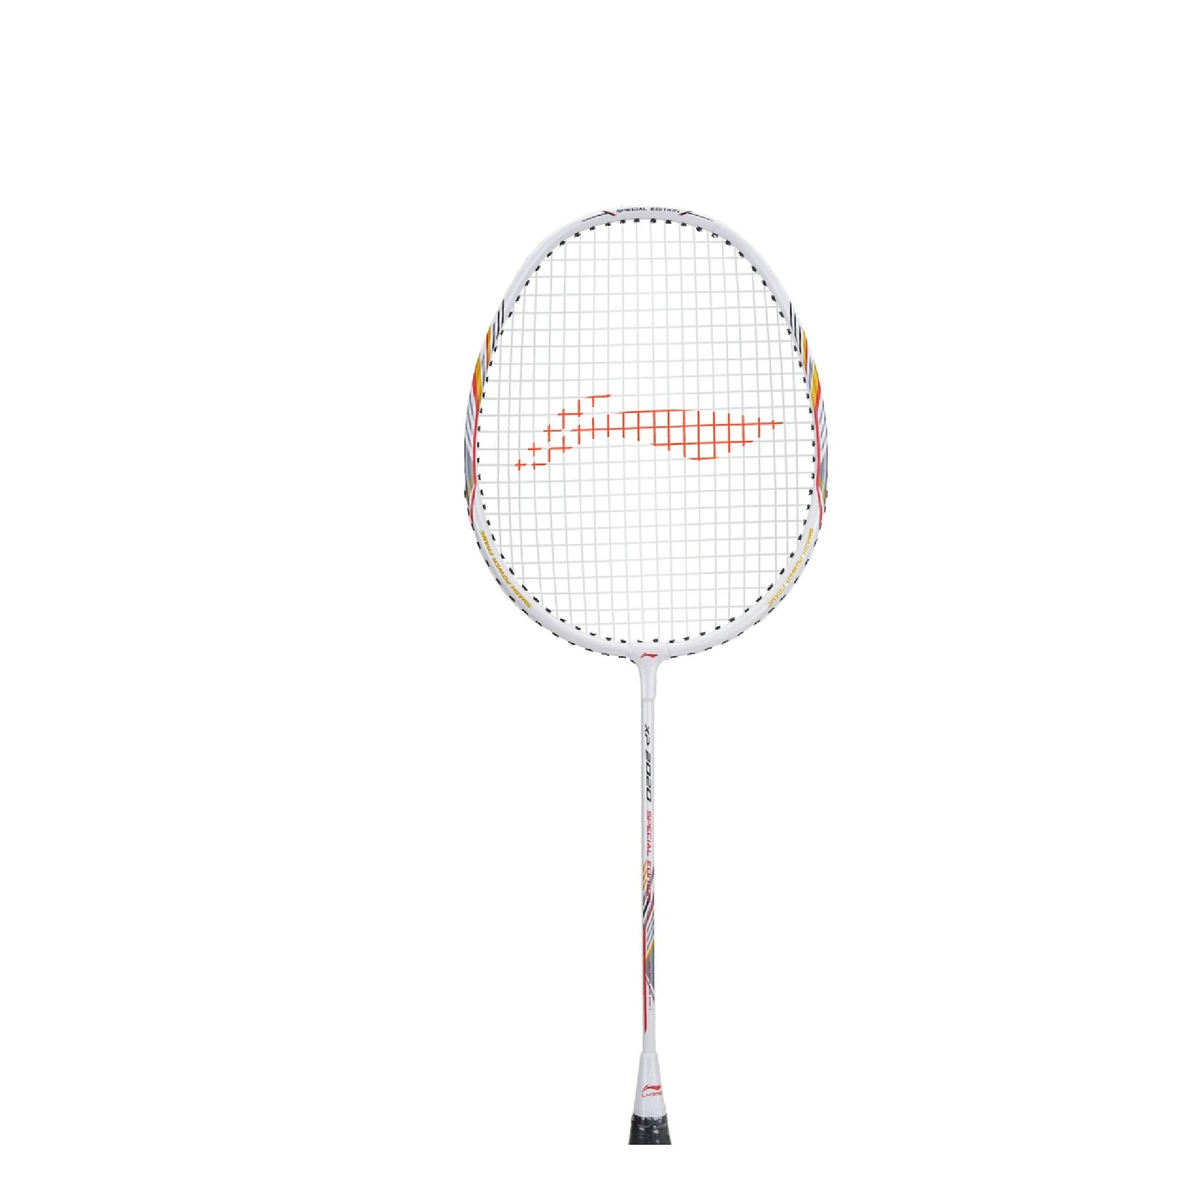 Li-Ning  Racket XP 2020, White with cover, AYPQ154-5